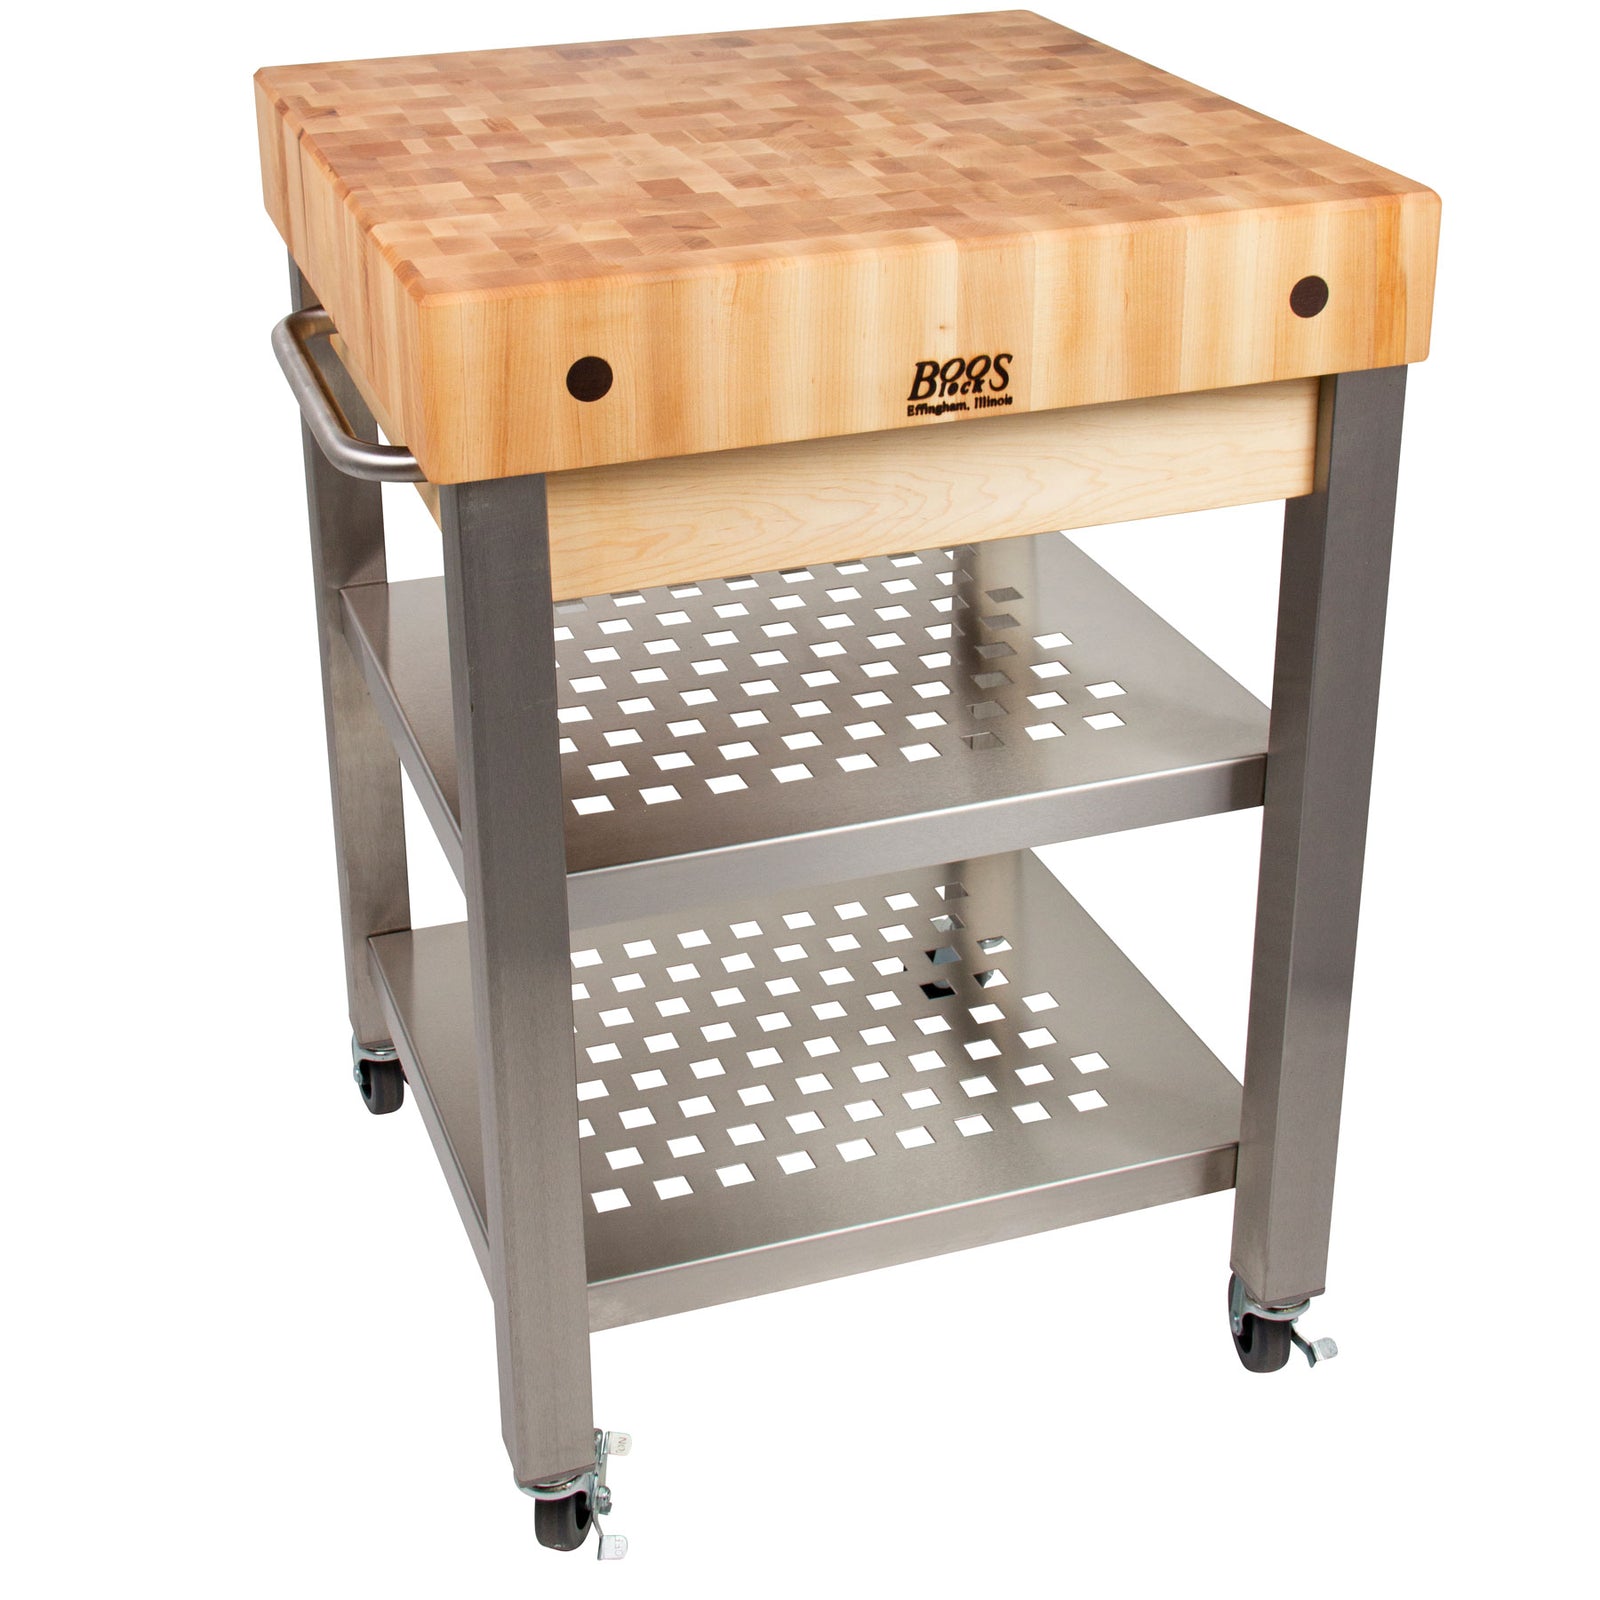 Maple Cucina Elegante Kitchen Cart (No Drop Leaf) - John Boos & Co